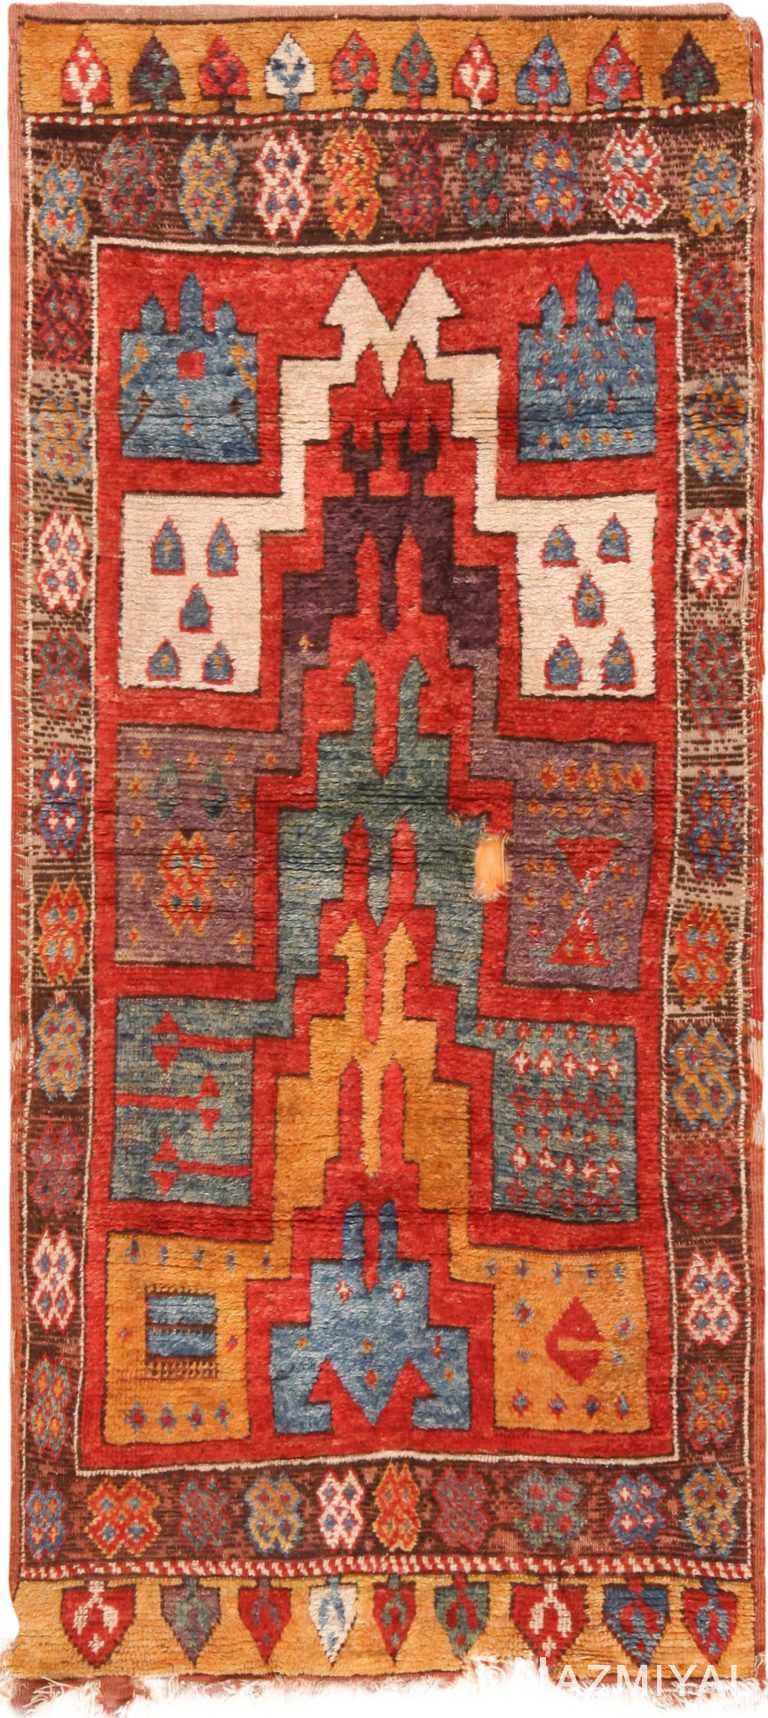 Magnificent Antique Turkish Karapinar Prayer Rug 71165 by Nazmiyal Antique Rugs